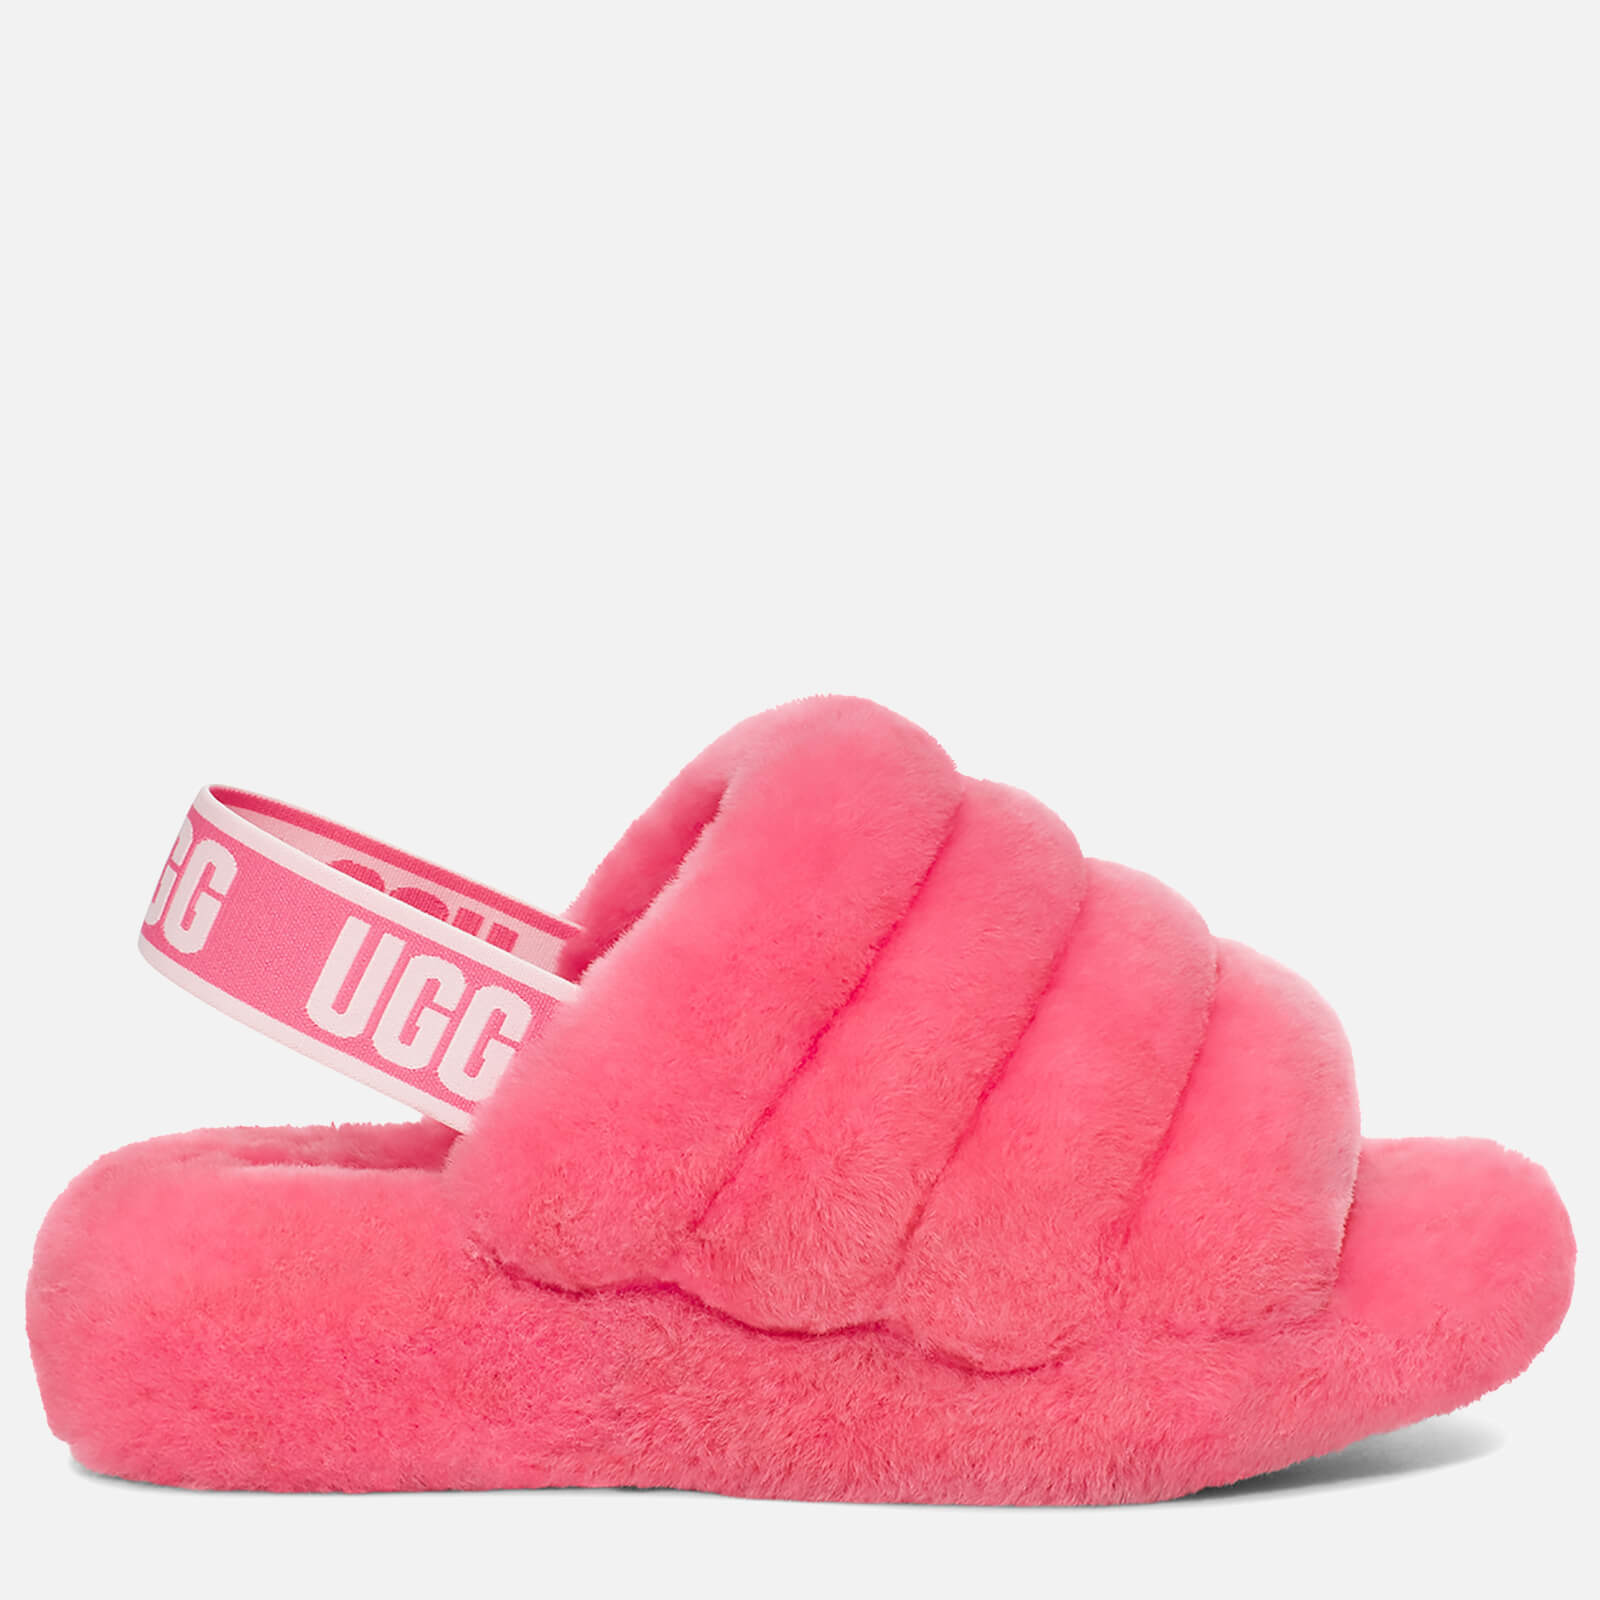 Ugg Women's Fluff Yeah Slide Sheepskin Slippers - Pink Rose - Uk 4